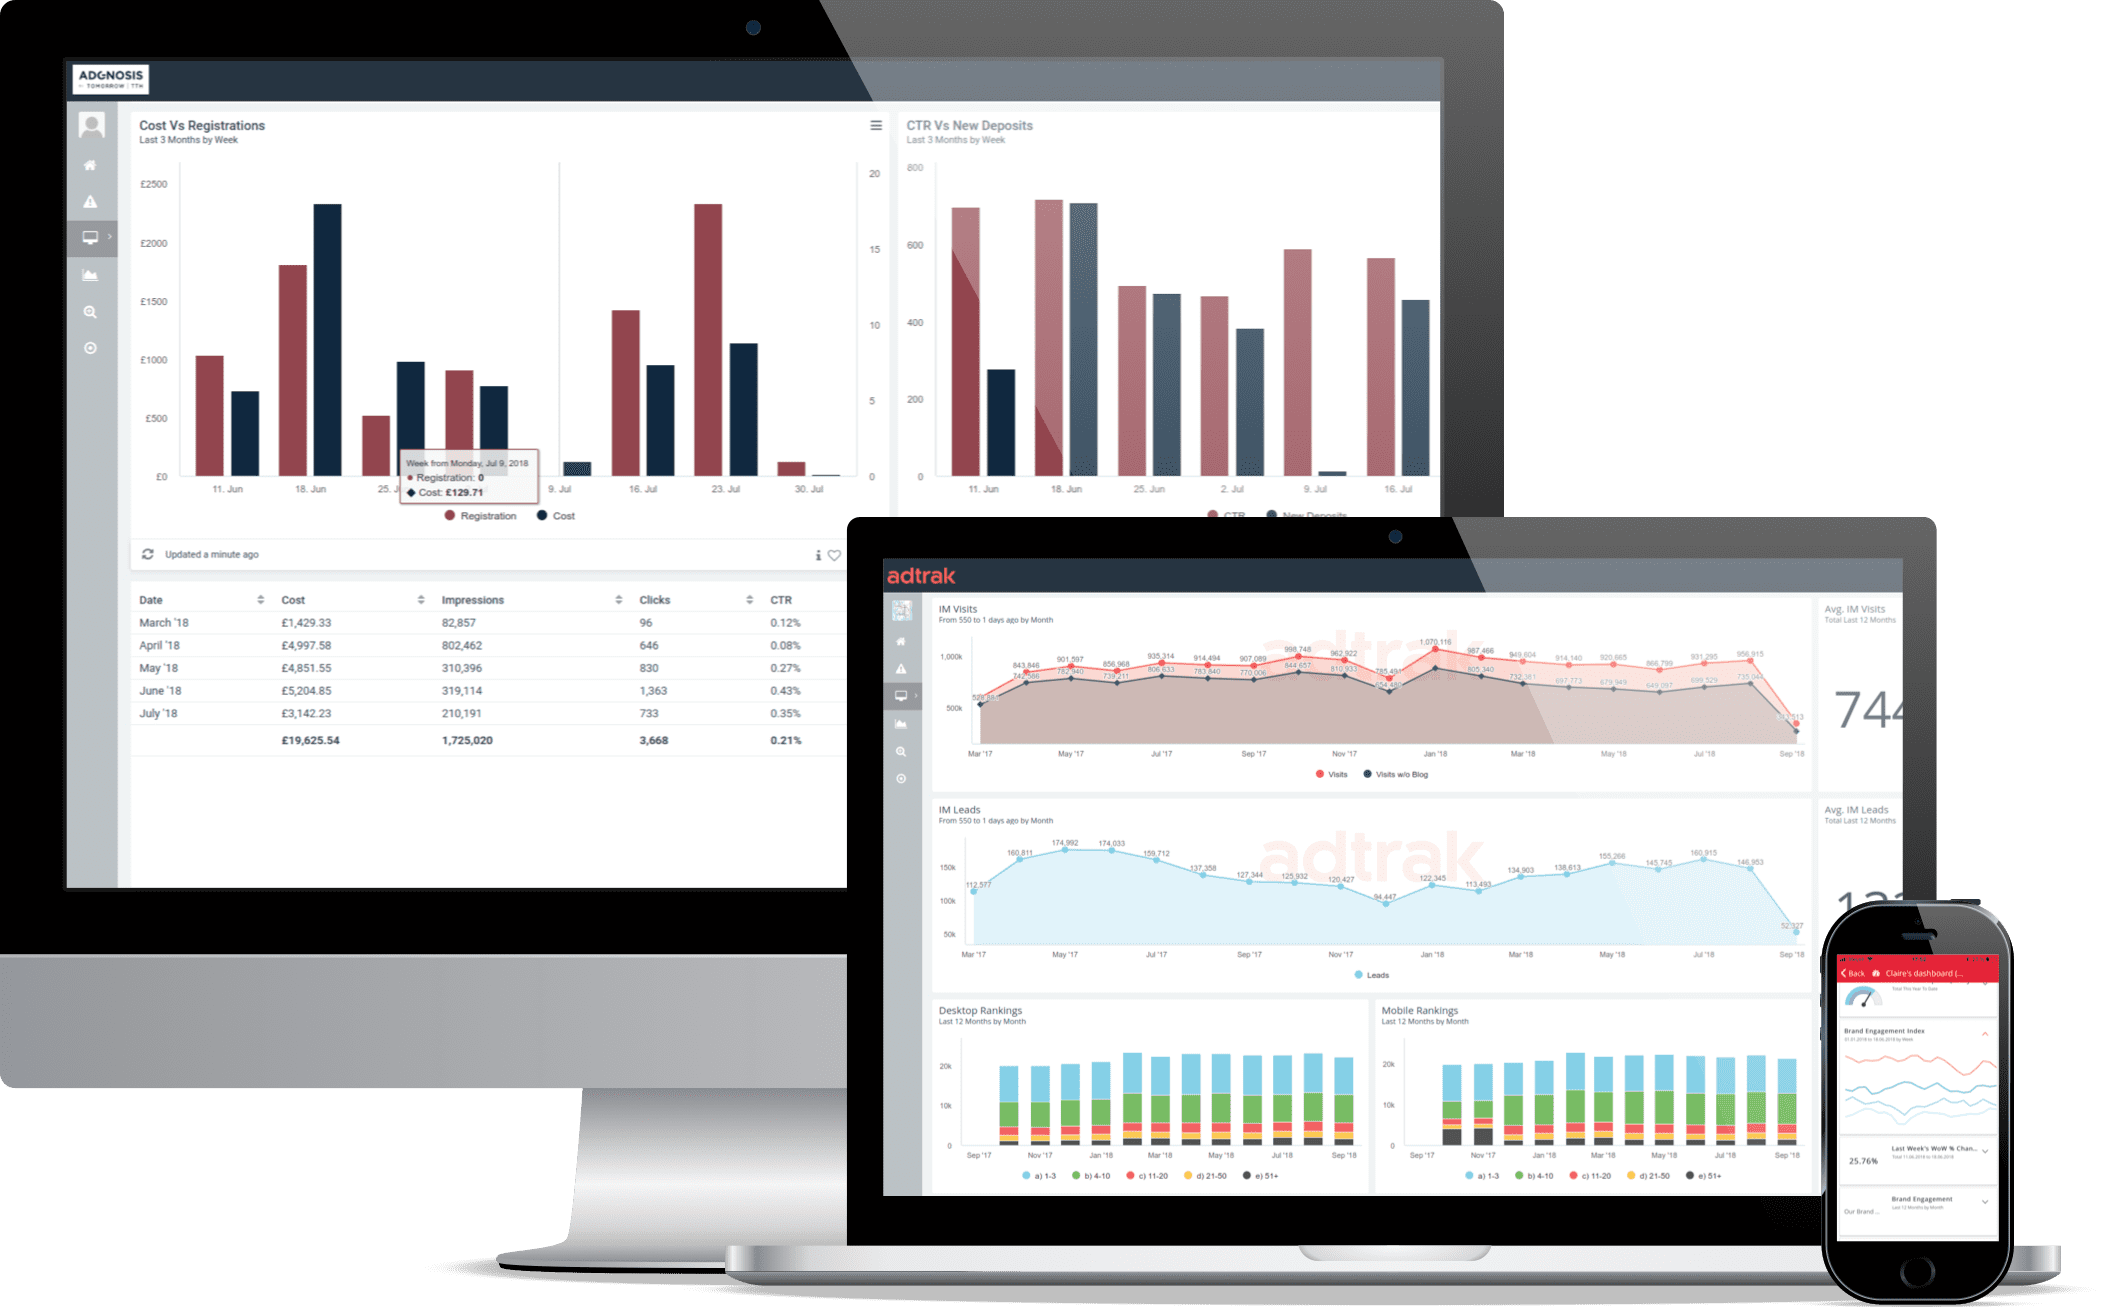 Interface of Avora, an enterprise analytics platform